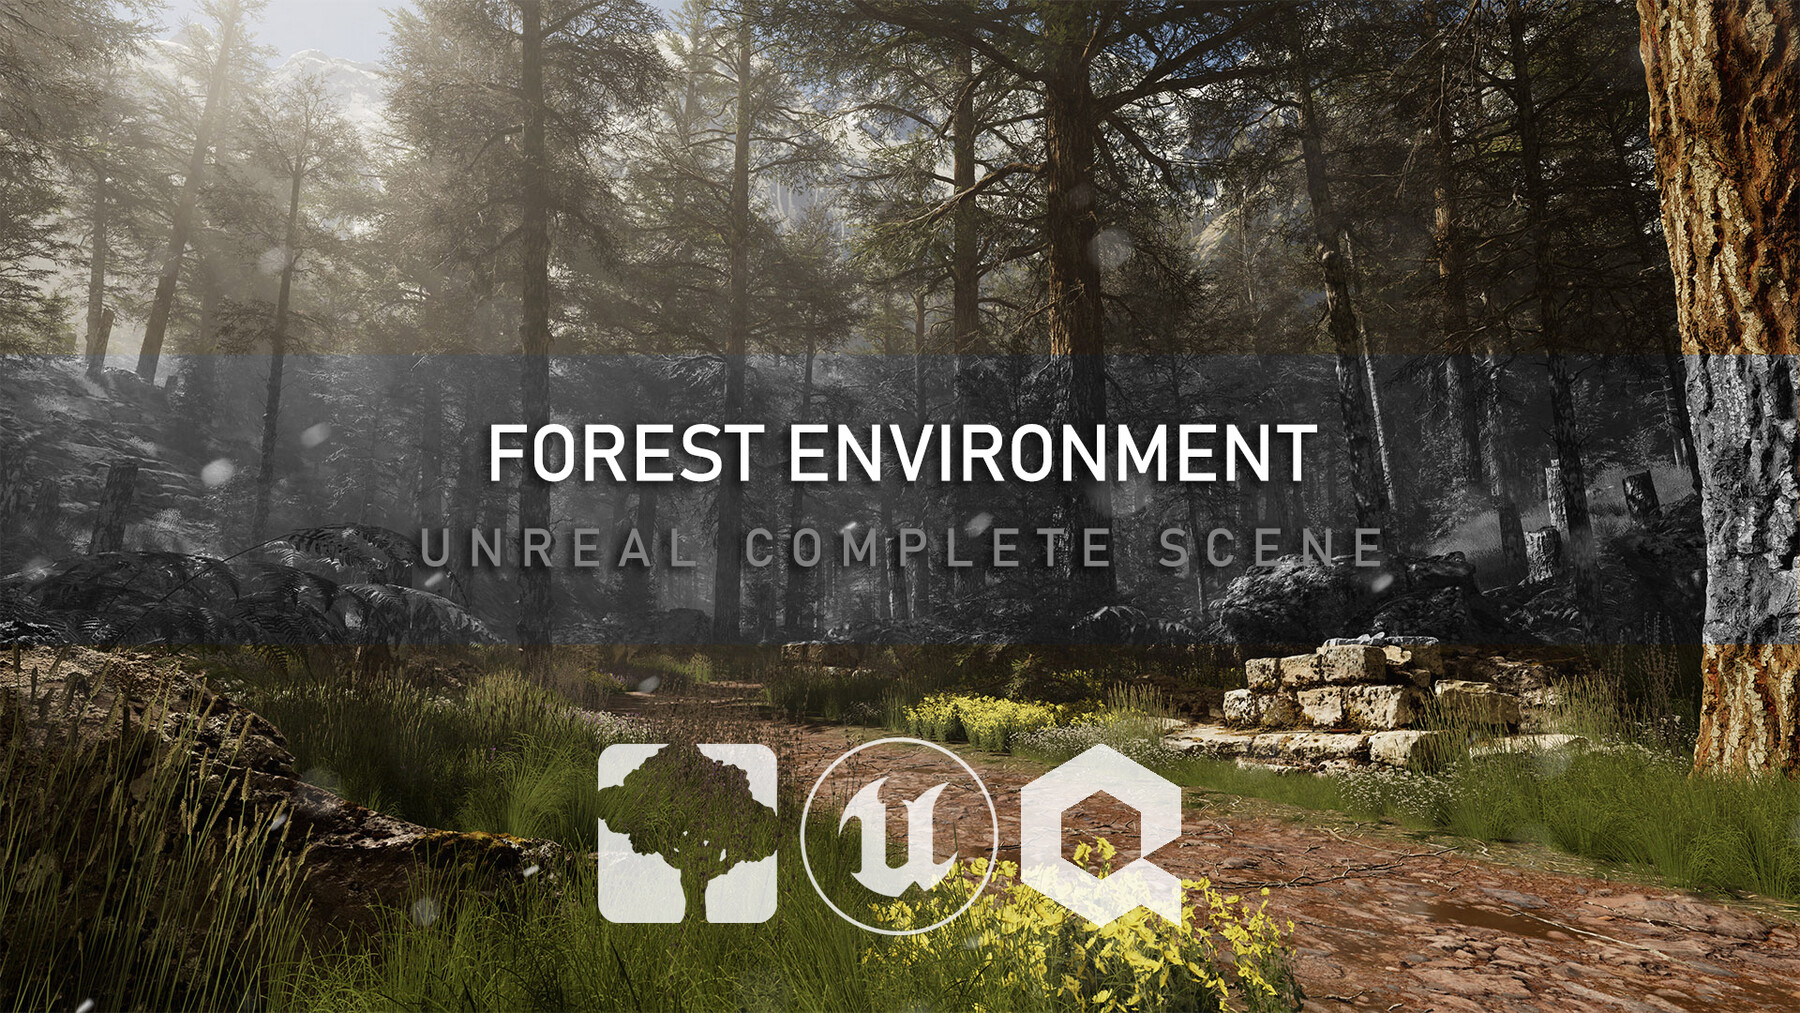 Artstation - Unreal Complete Scene - Forest Environment